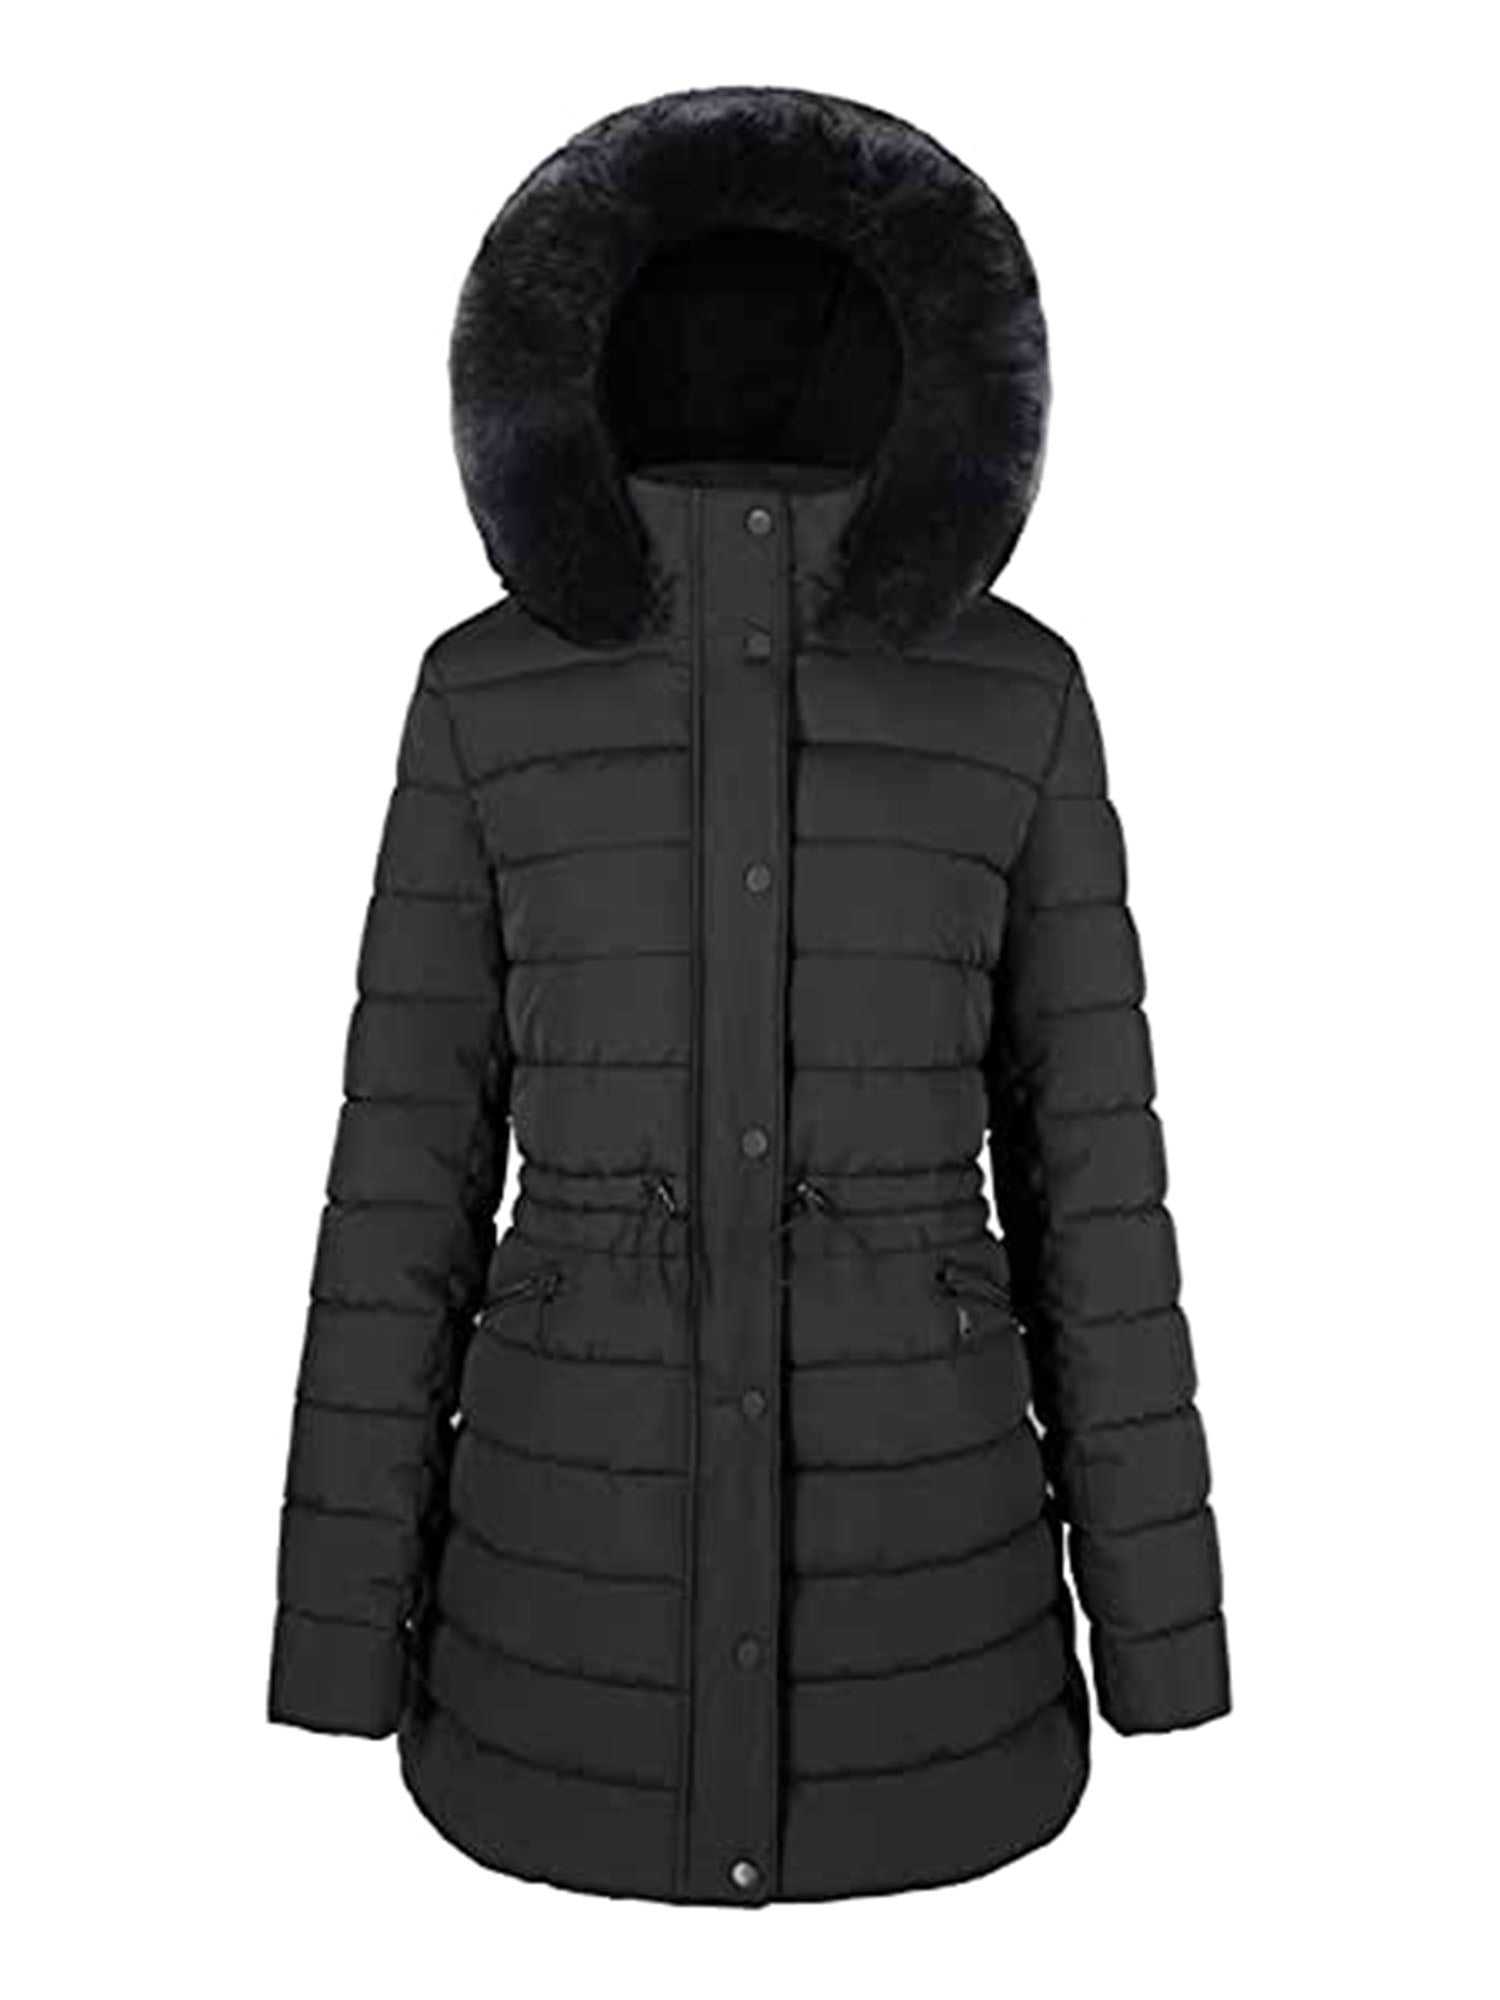 Csndyce Women's Puffer Jacket Water-Resistant Full-Zip Long Warm Winter ...